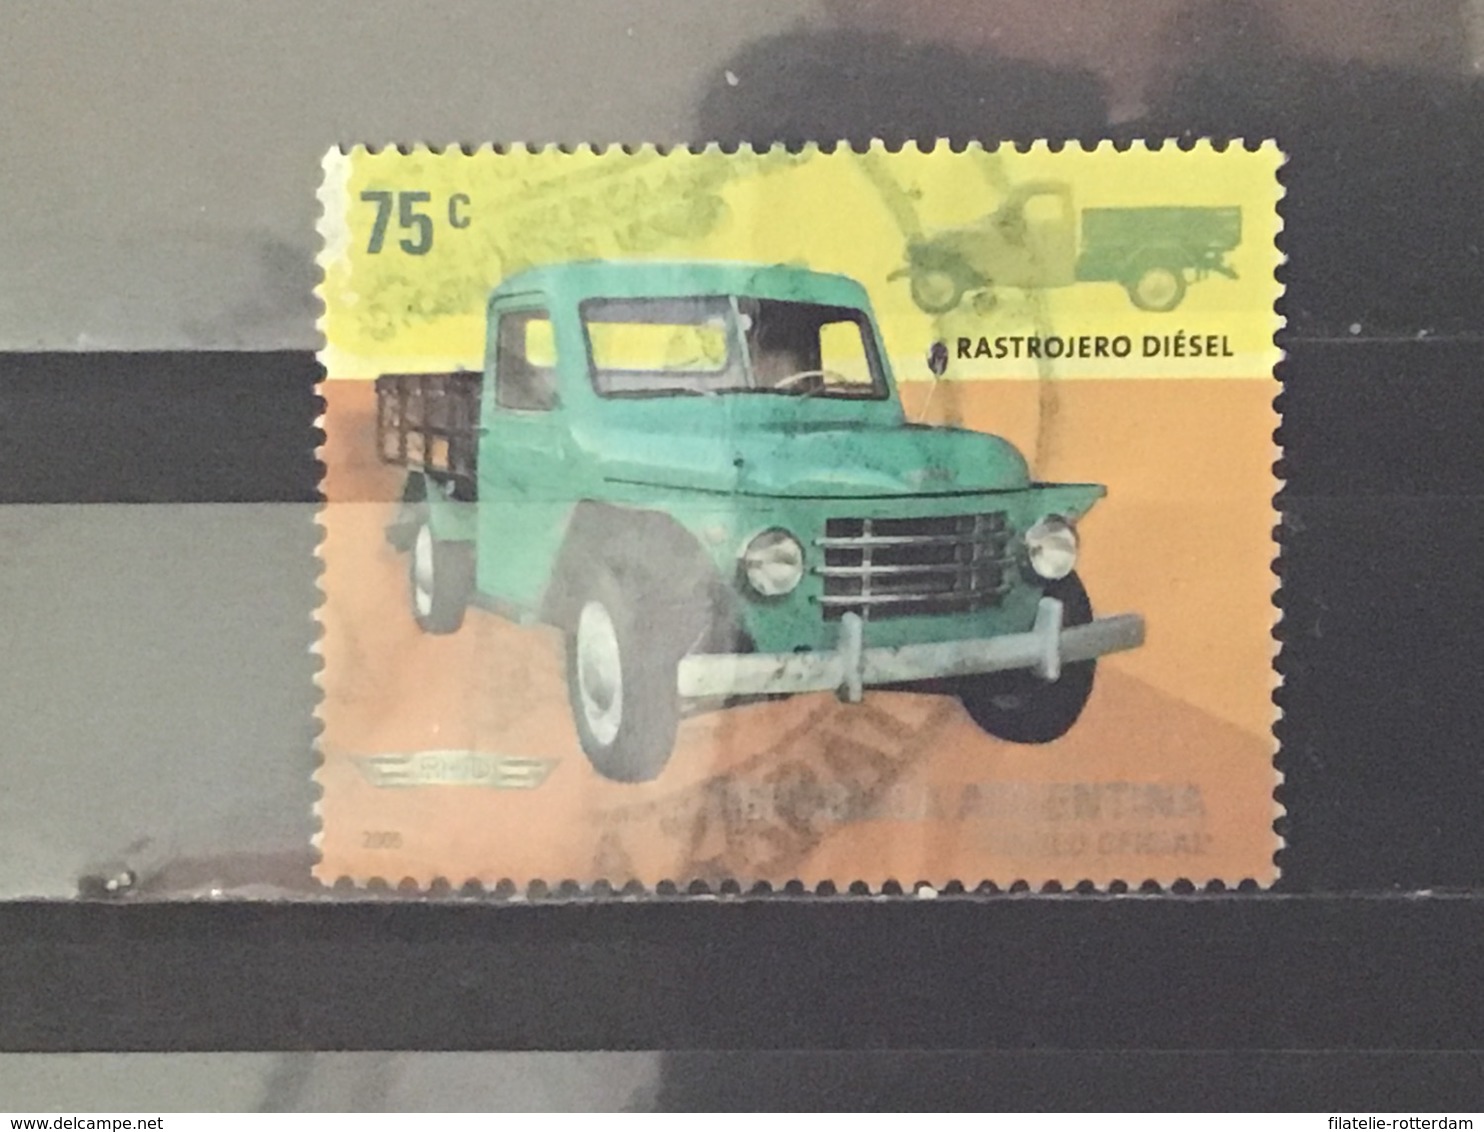 Argentinië / Argentina - Auto’s (75) 2005 - Used Stamps